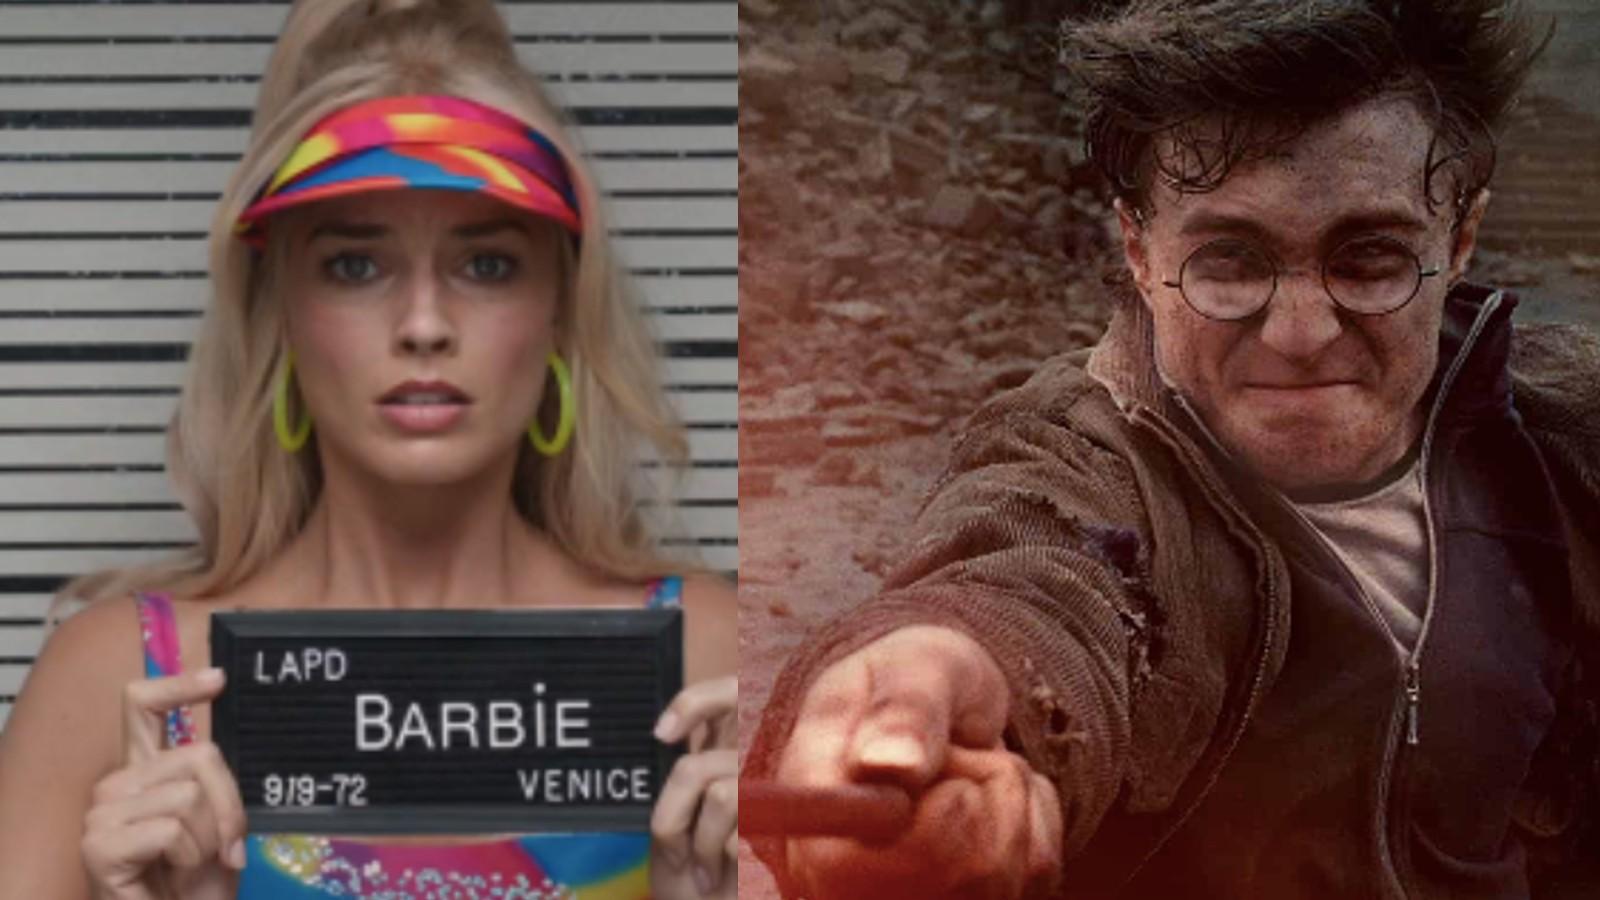 Barbie dethrones Harry Potter finale as highest grossing Warner Bros. movie  - Dexerto